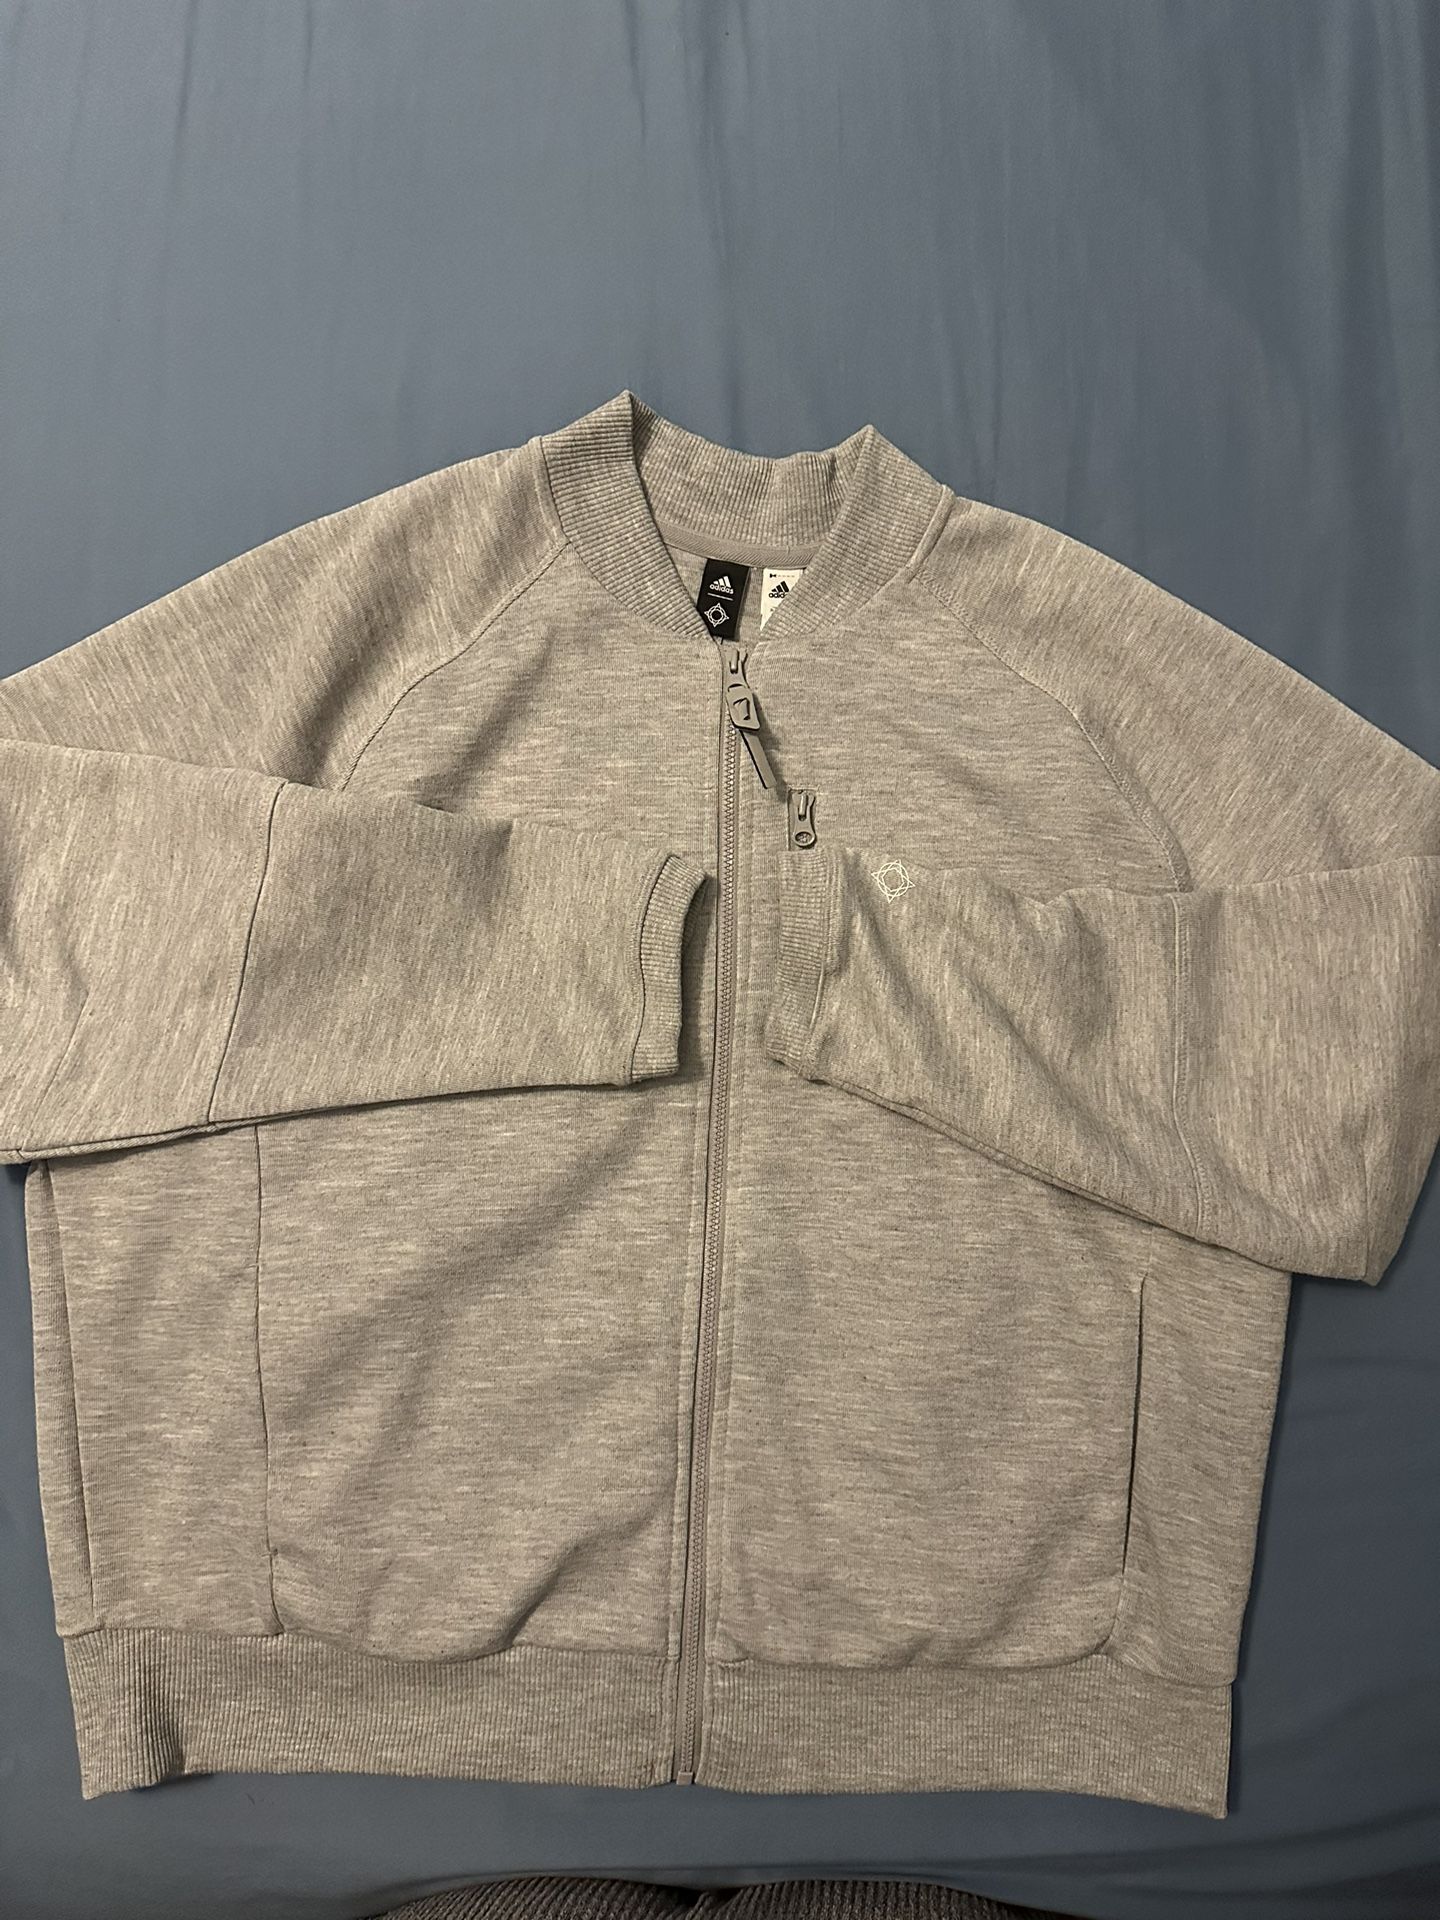 Adidas Men's Sweatshirt XL